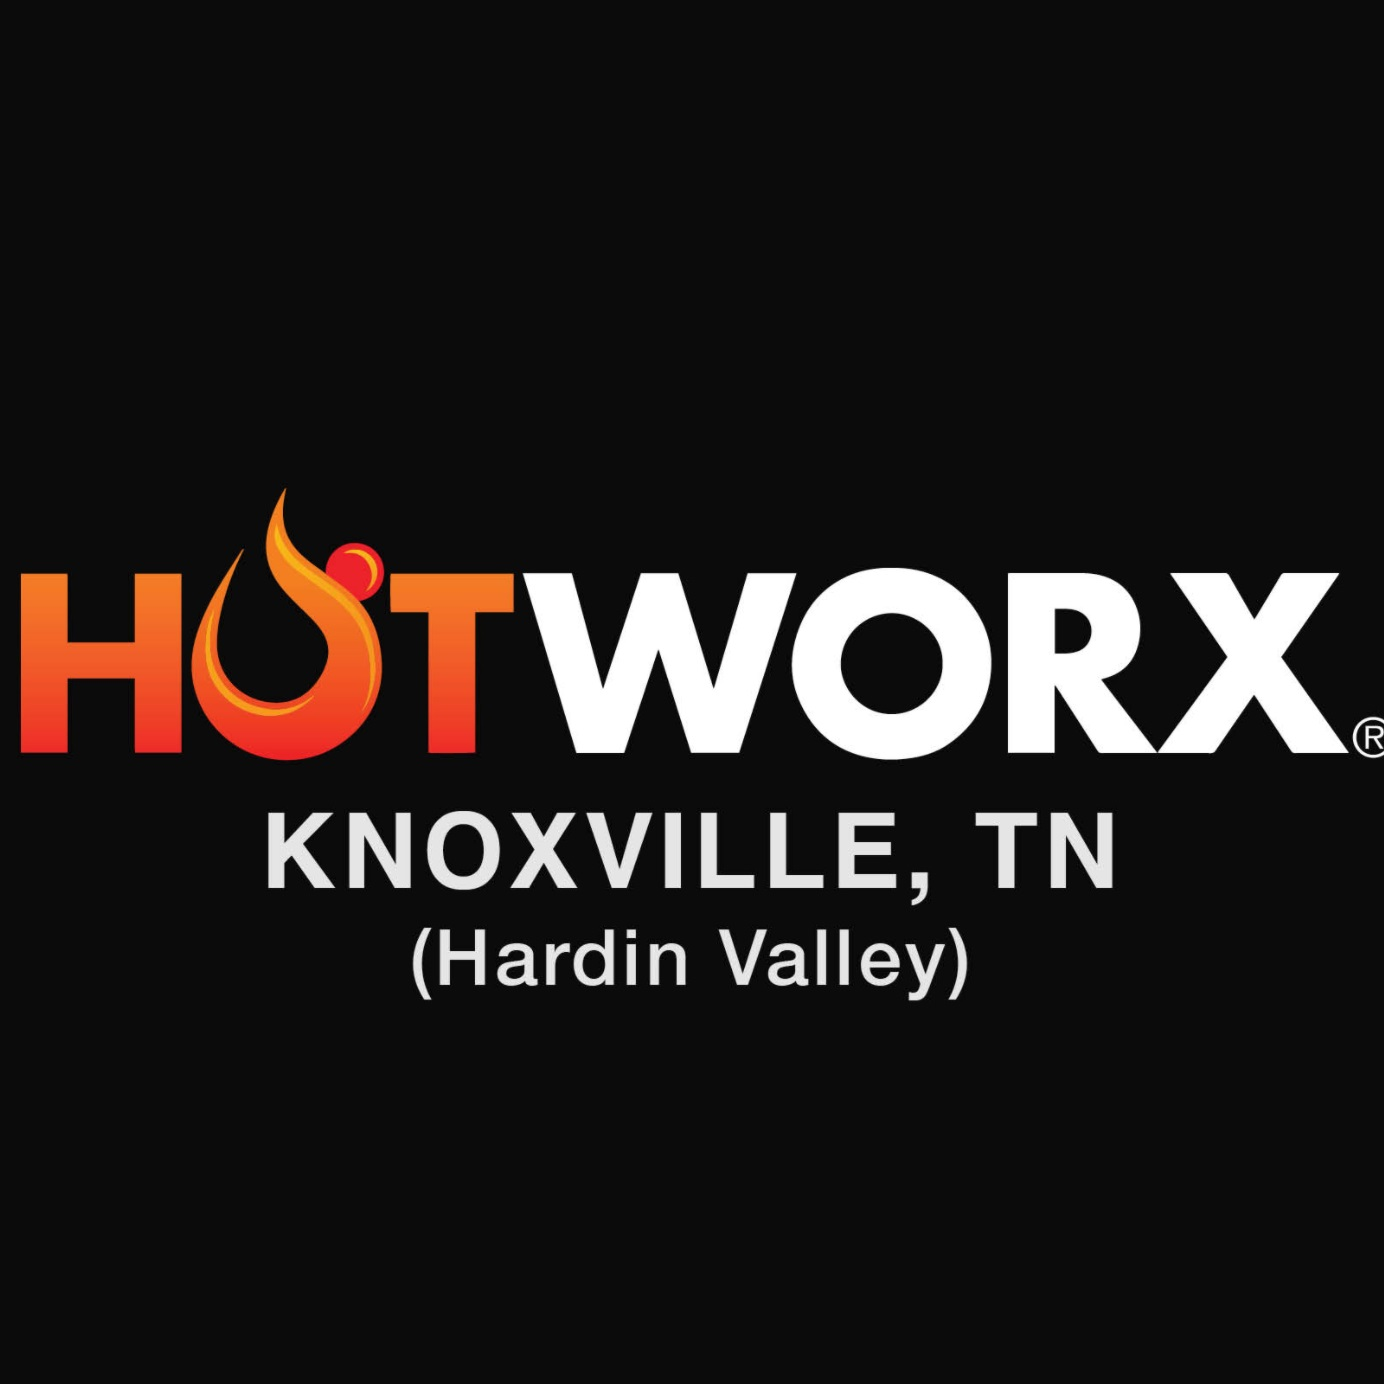 HOTWORX - Knoxville, TN (Hardin Valley) Logo